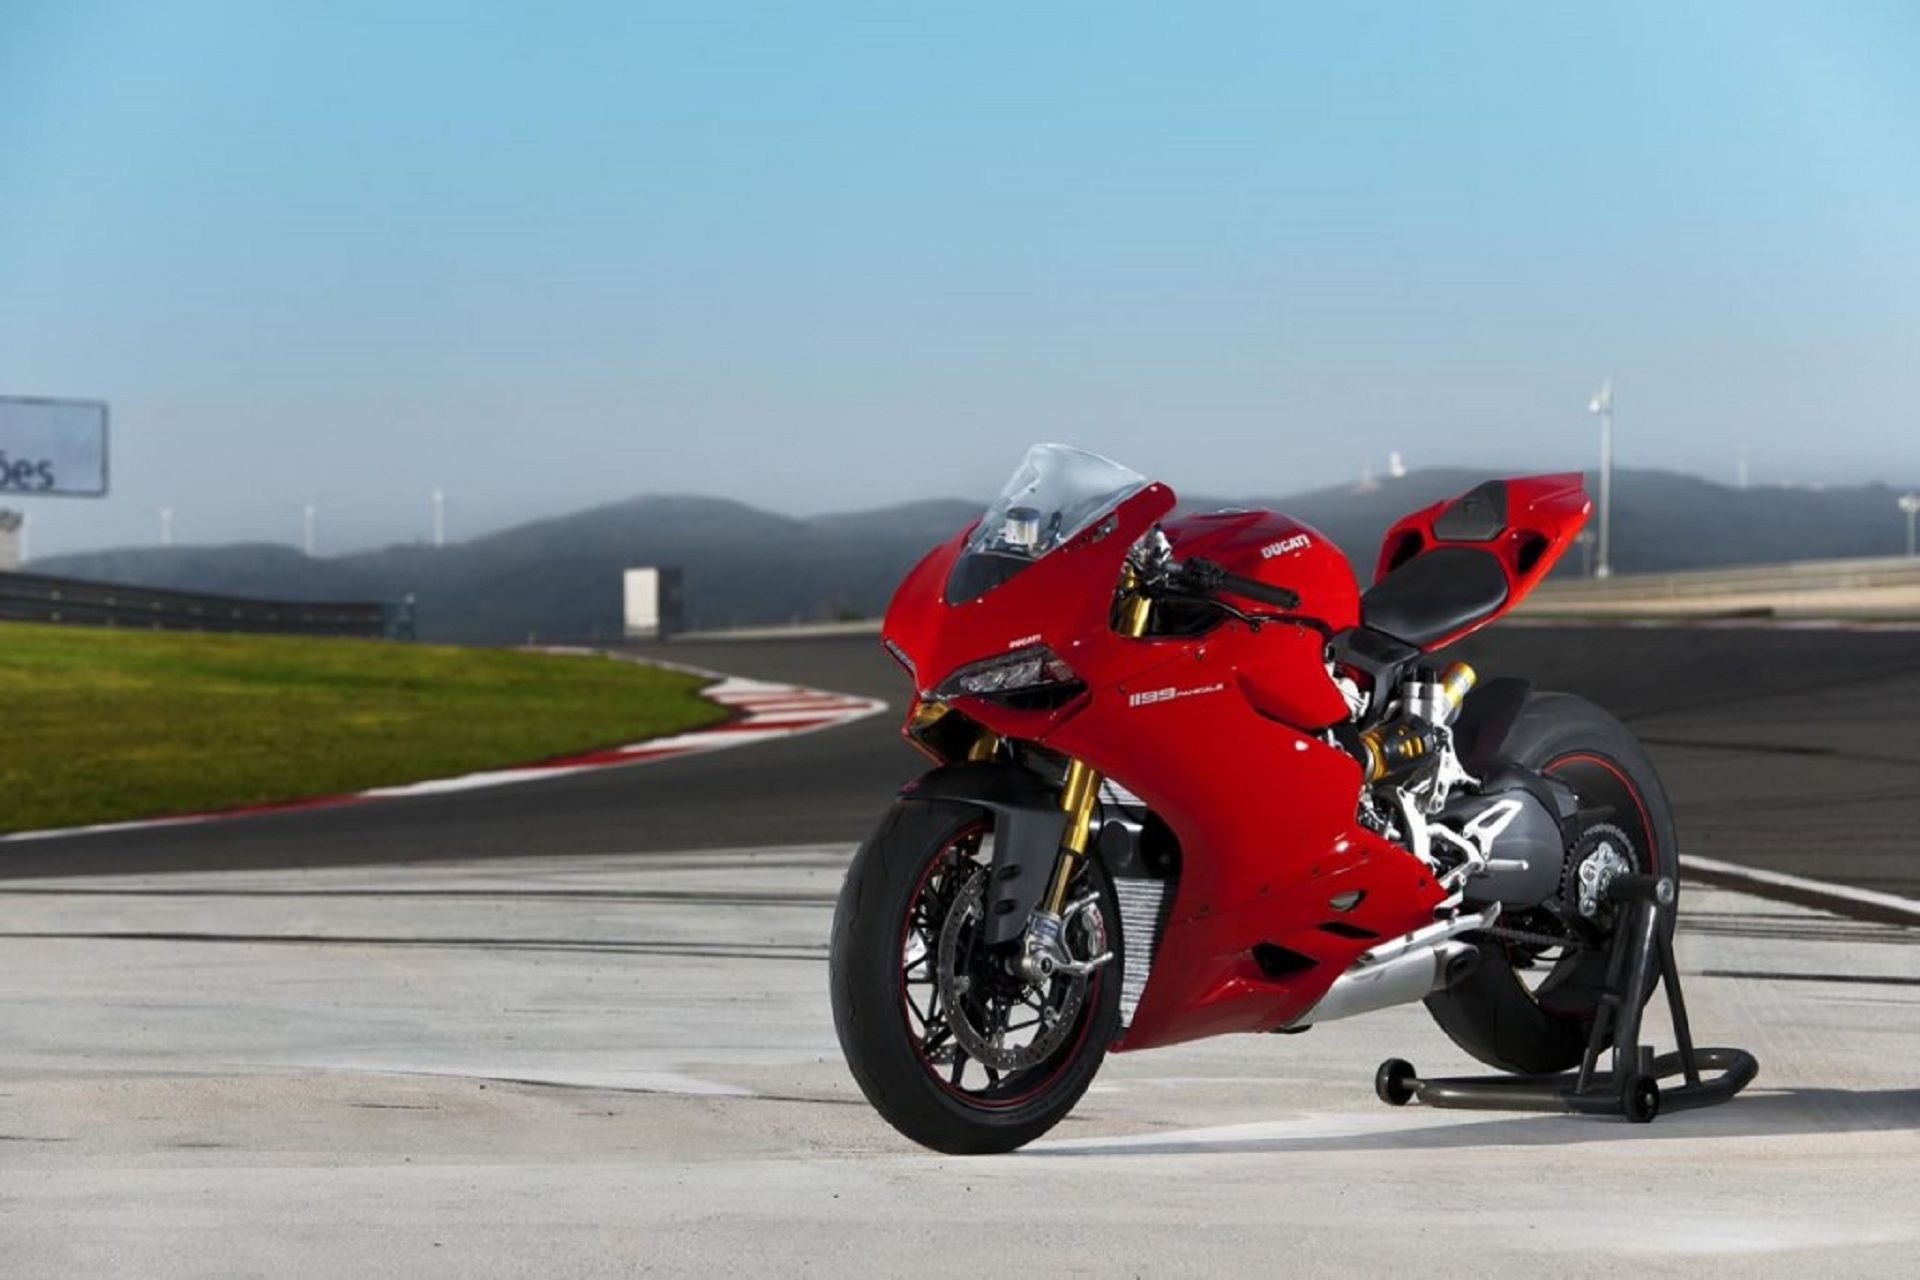 2012 Ducati Superbike 1199 Panigale